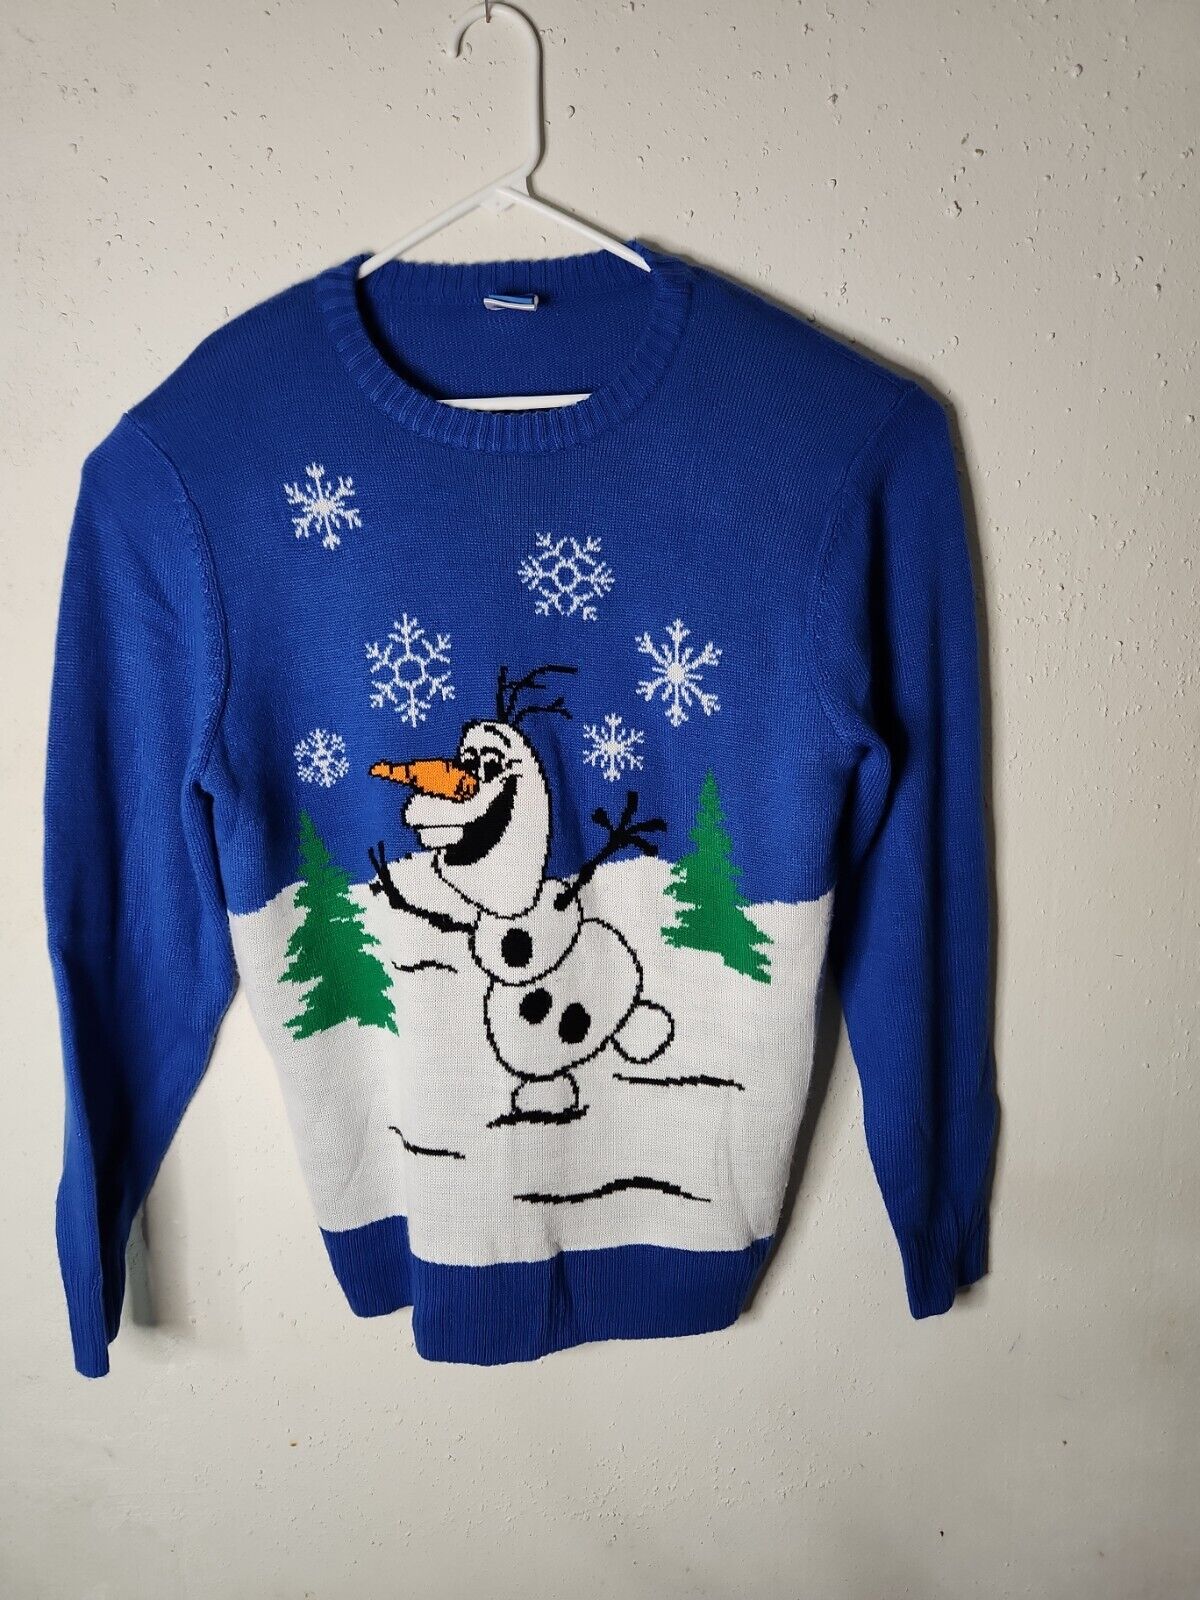 mens disney christmas sweater